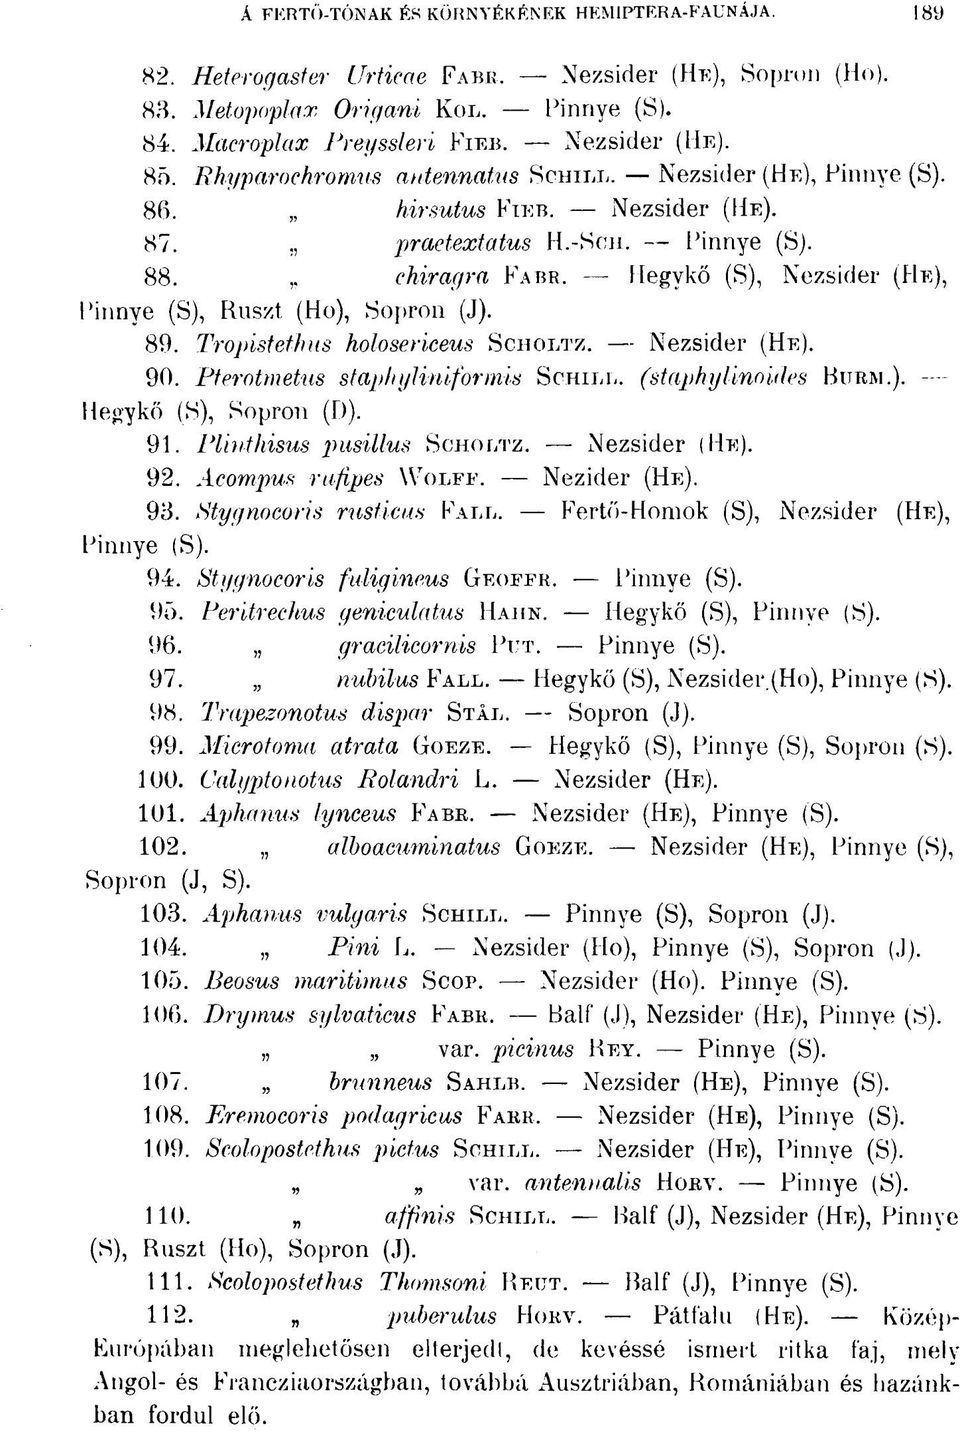 chiragra FARR, Hegykő (S), Nezsider (HE), Pinnye (S), Ruszt (Ho), Sopron (J). 89. Tropistethus holosericeus SCHOLTZ. Nezsider (HE). 90. Pterotmetus stapliy Uniformis SCHILL, (staphylinoides BURM.). Hegykő (S), Sopron (D).